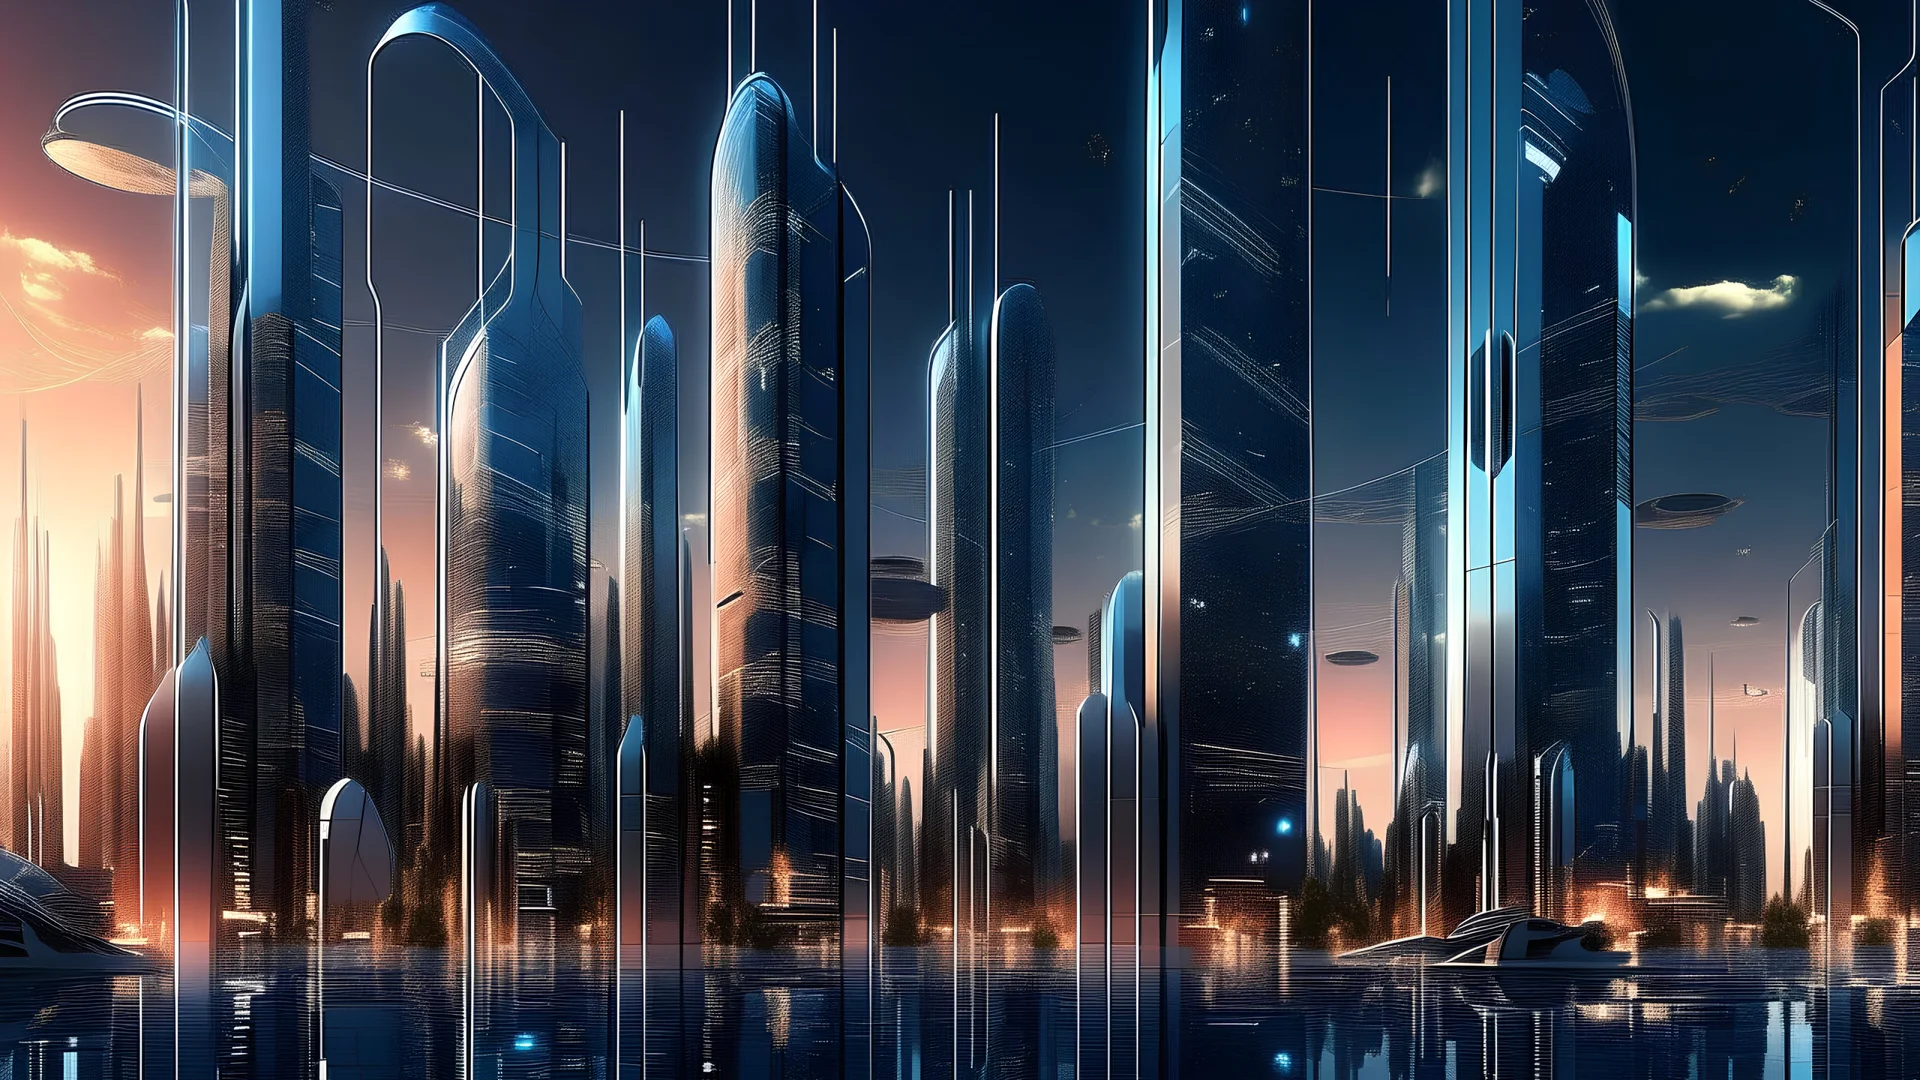 City Technology skyline year 2030